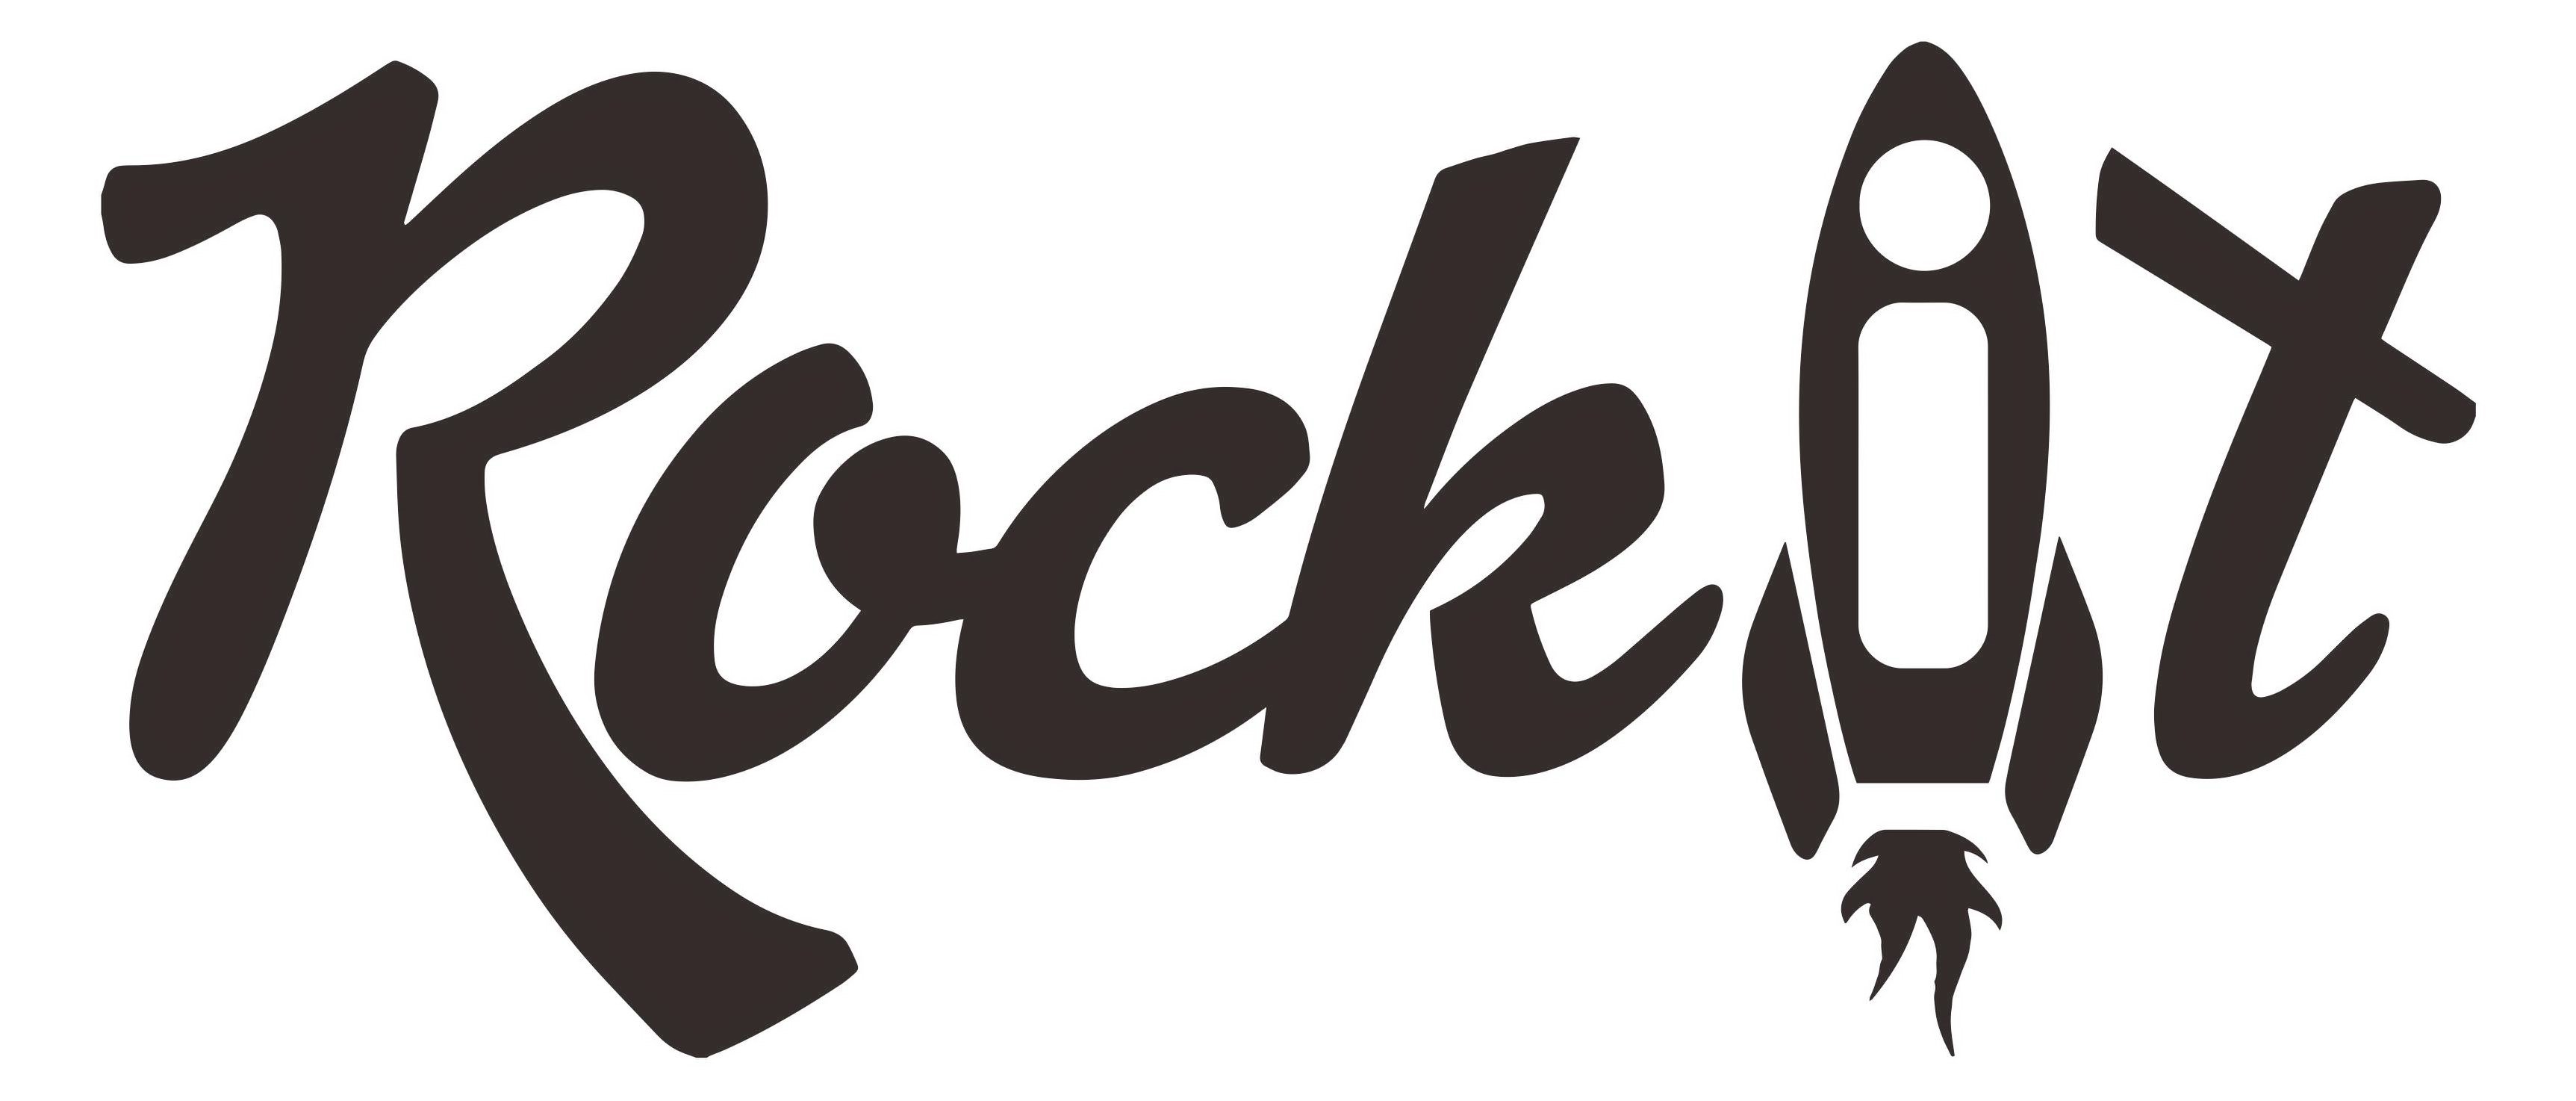 Trademark Logo ROCKIT